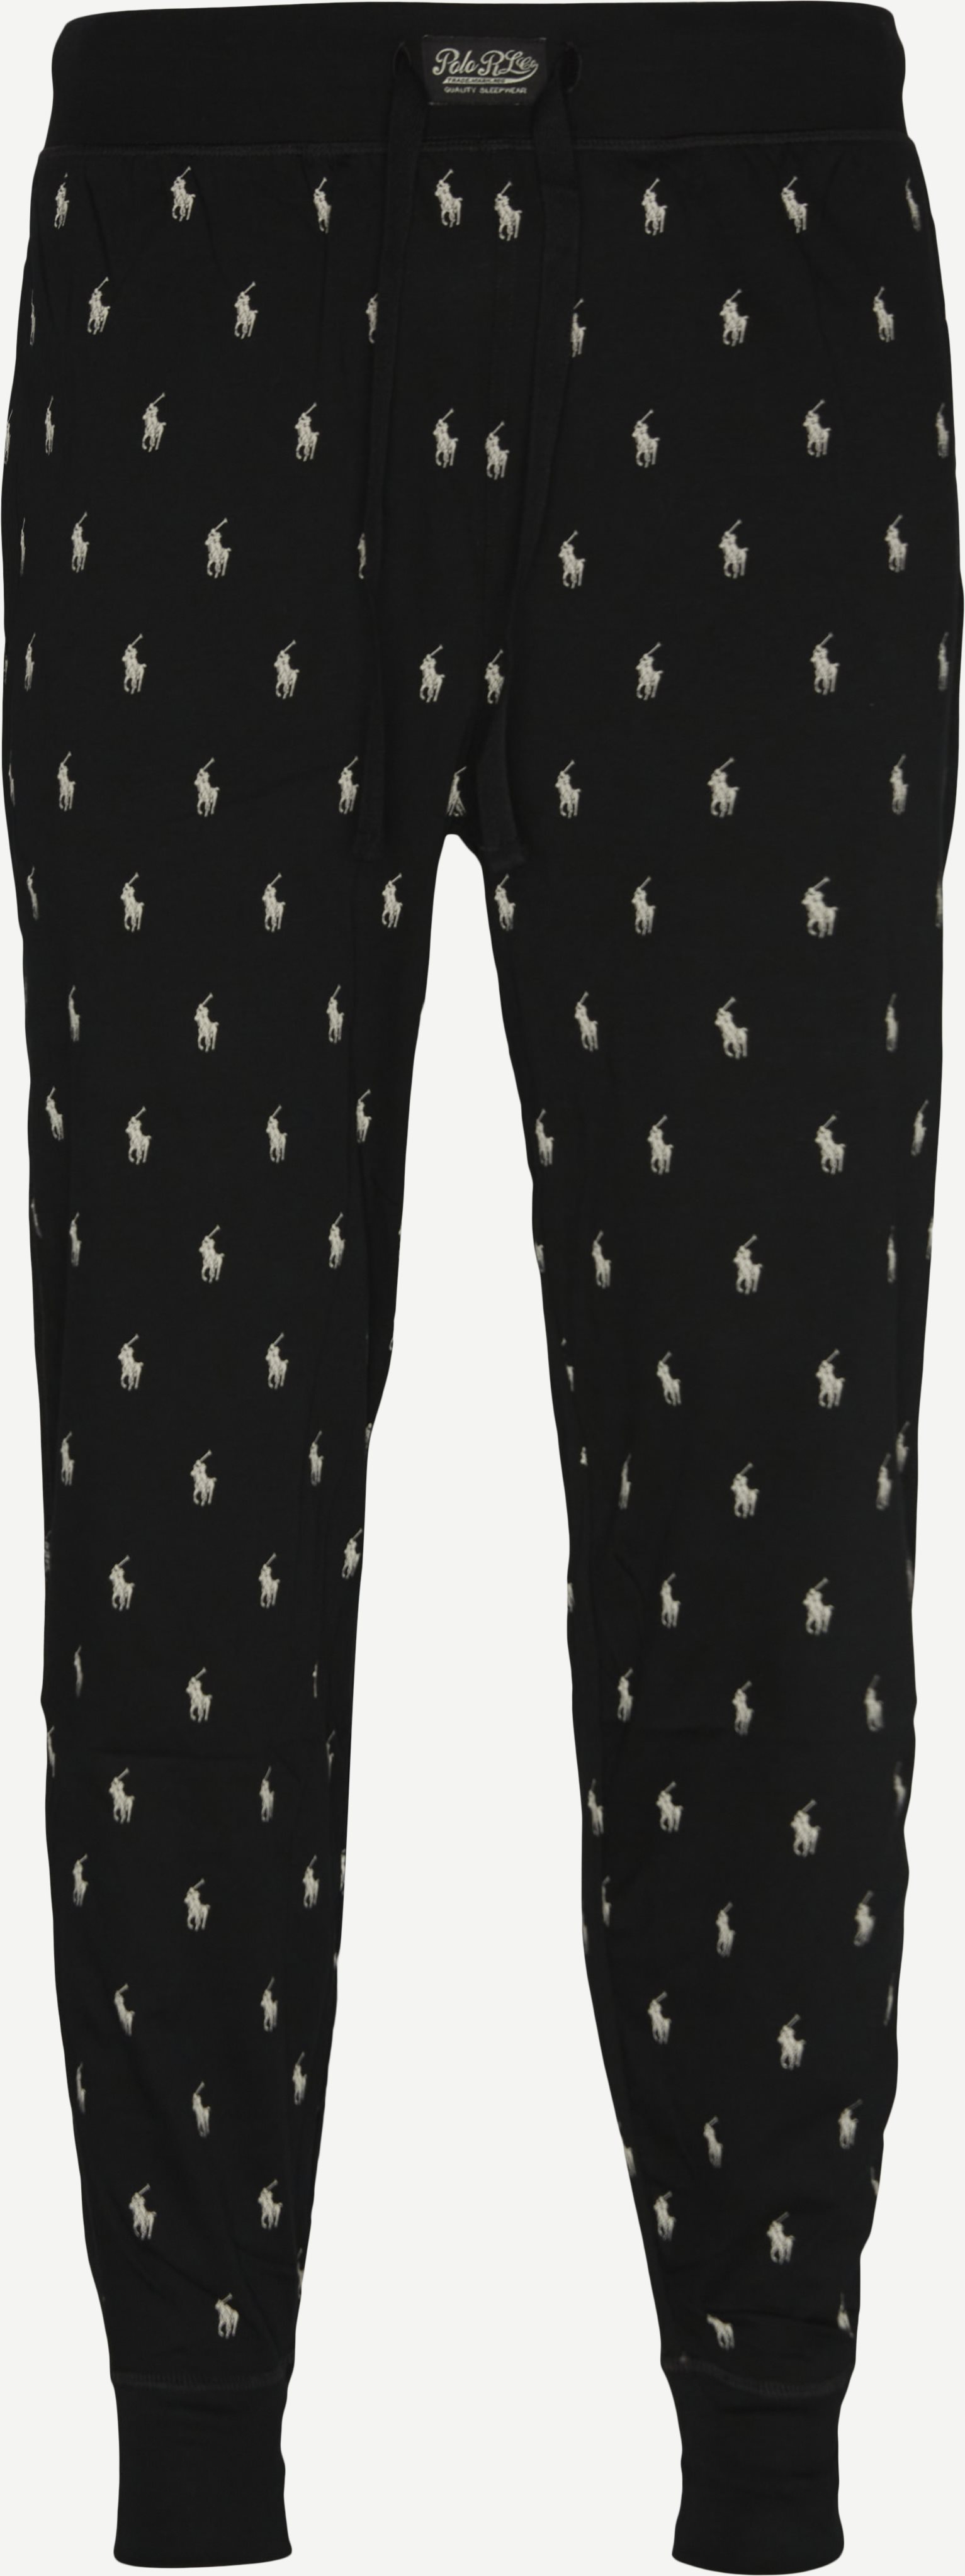 Pyjamasbukser - Undertøj - Regular fit - Sort